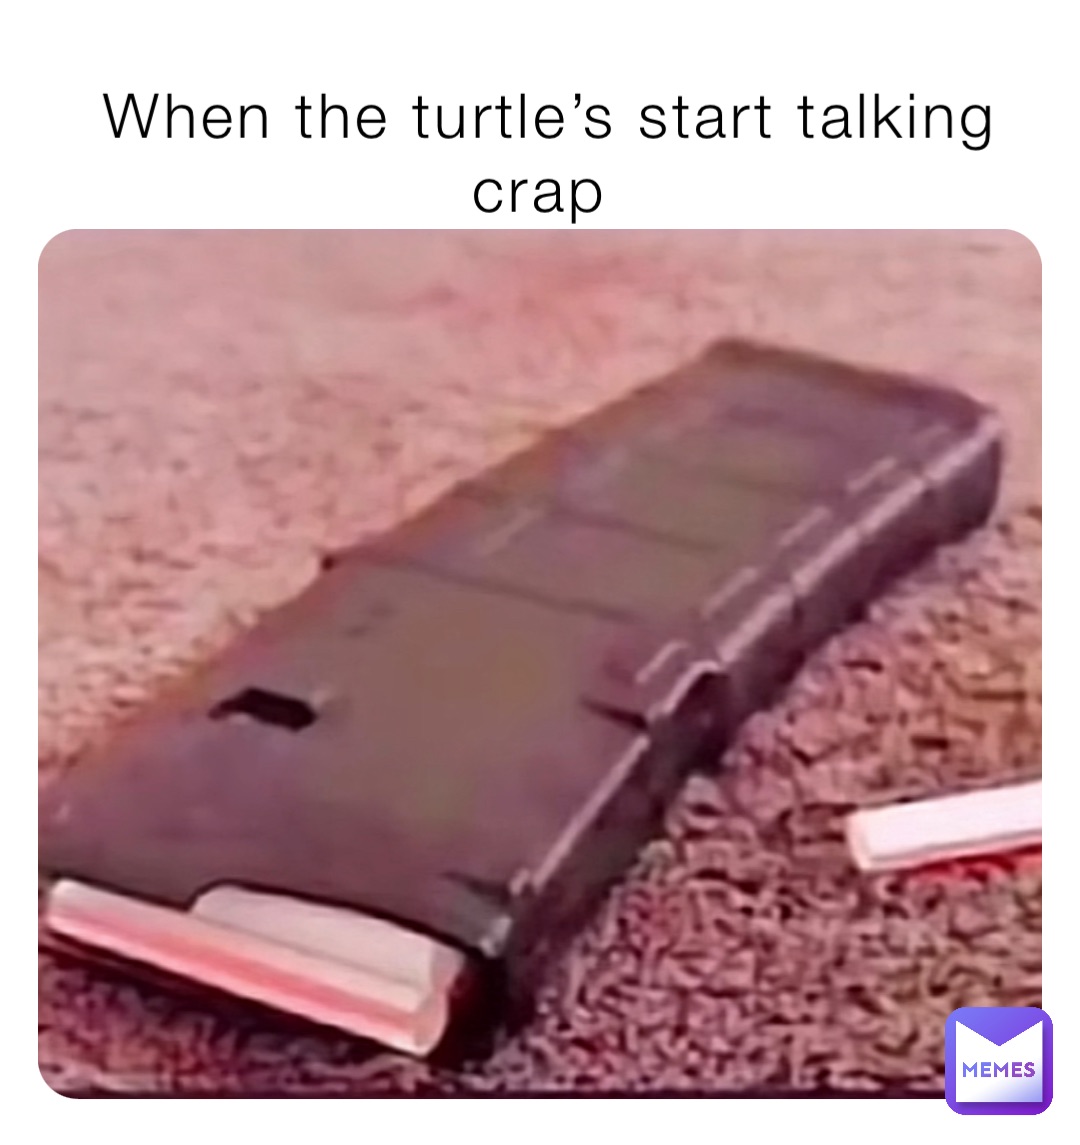 When the turtle’s start talking crap